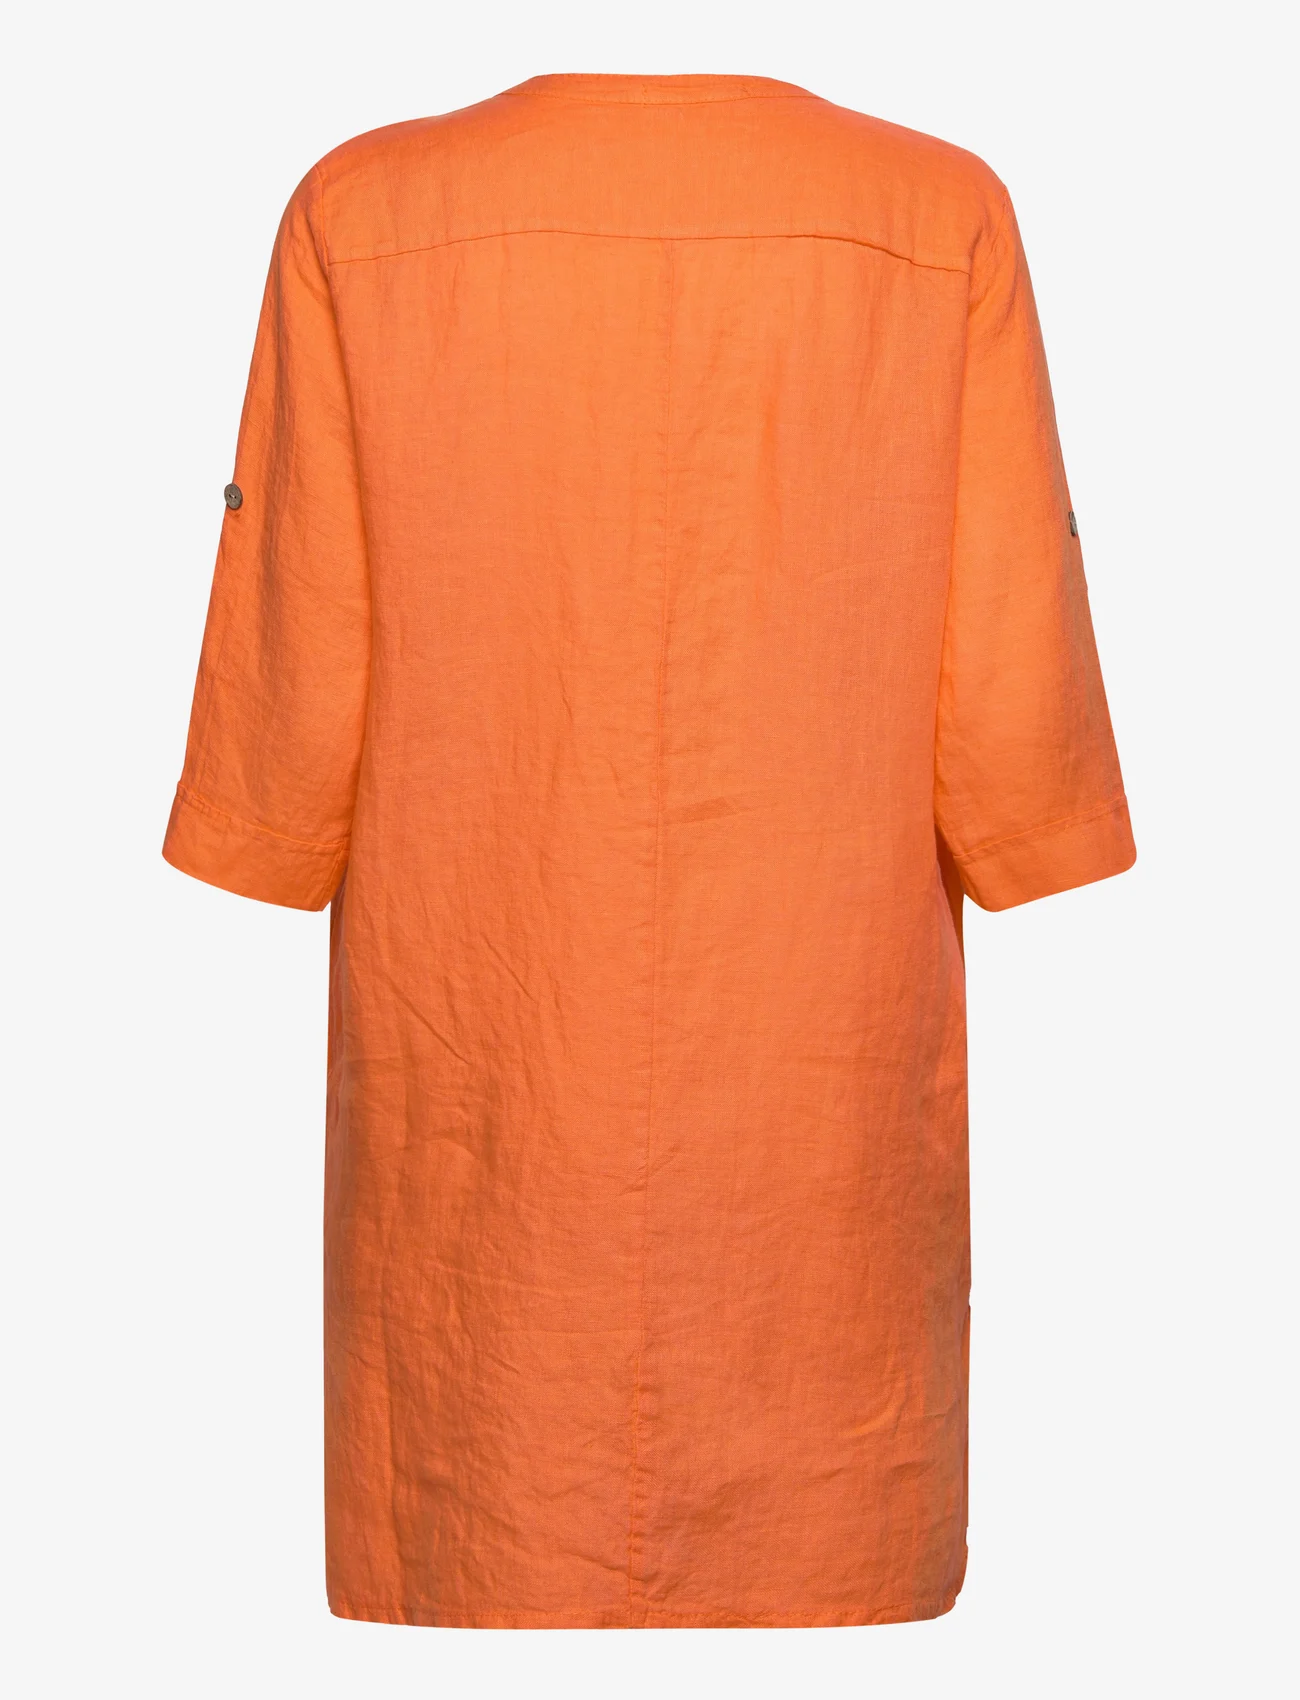 Cream - CRBellis Caftan Short Dress - Molli - tunics - exotic orange - 1